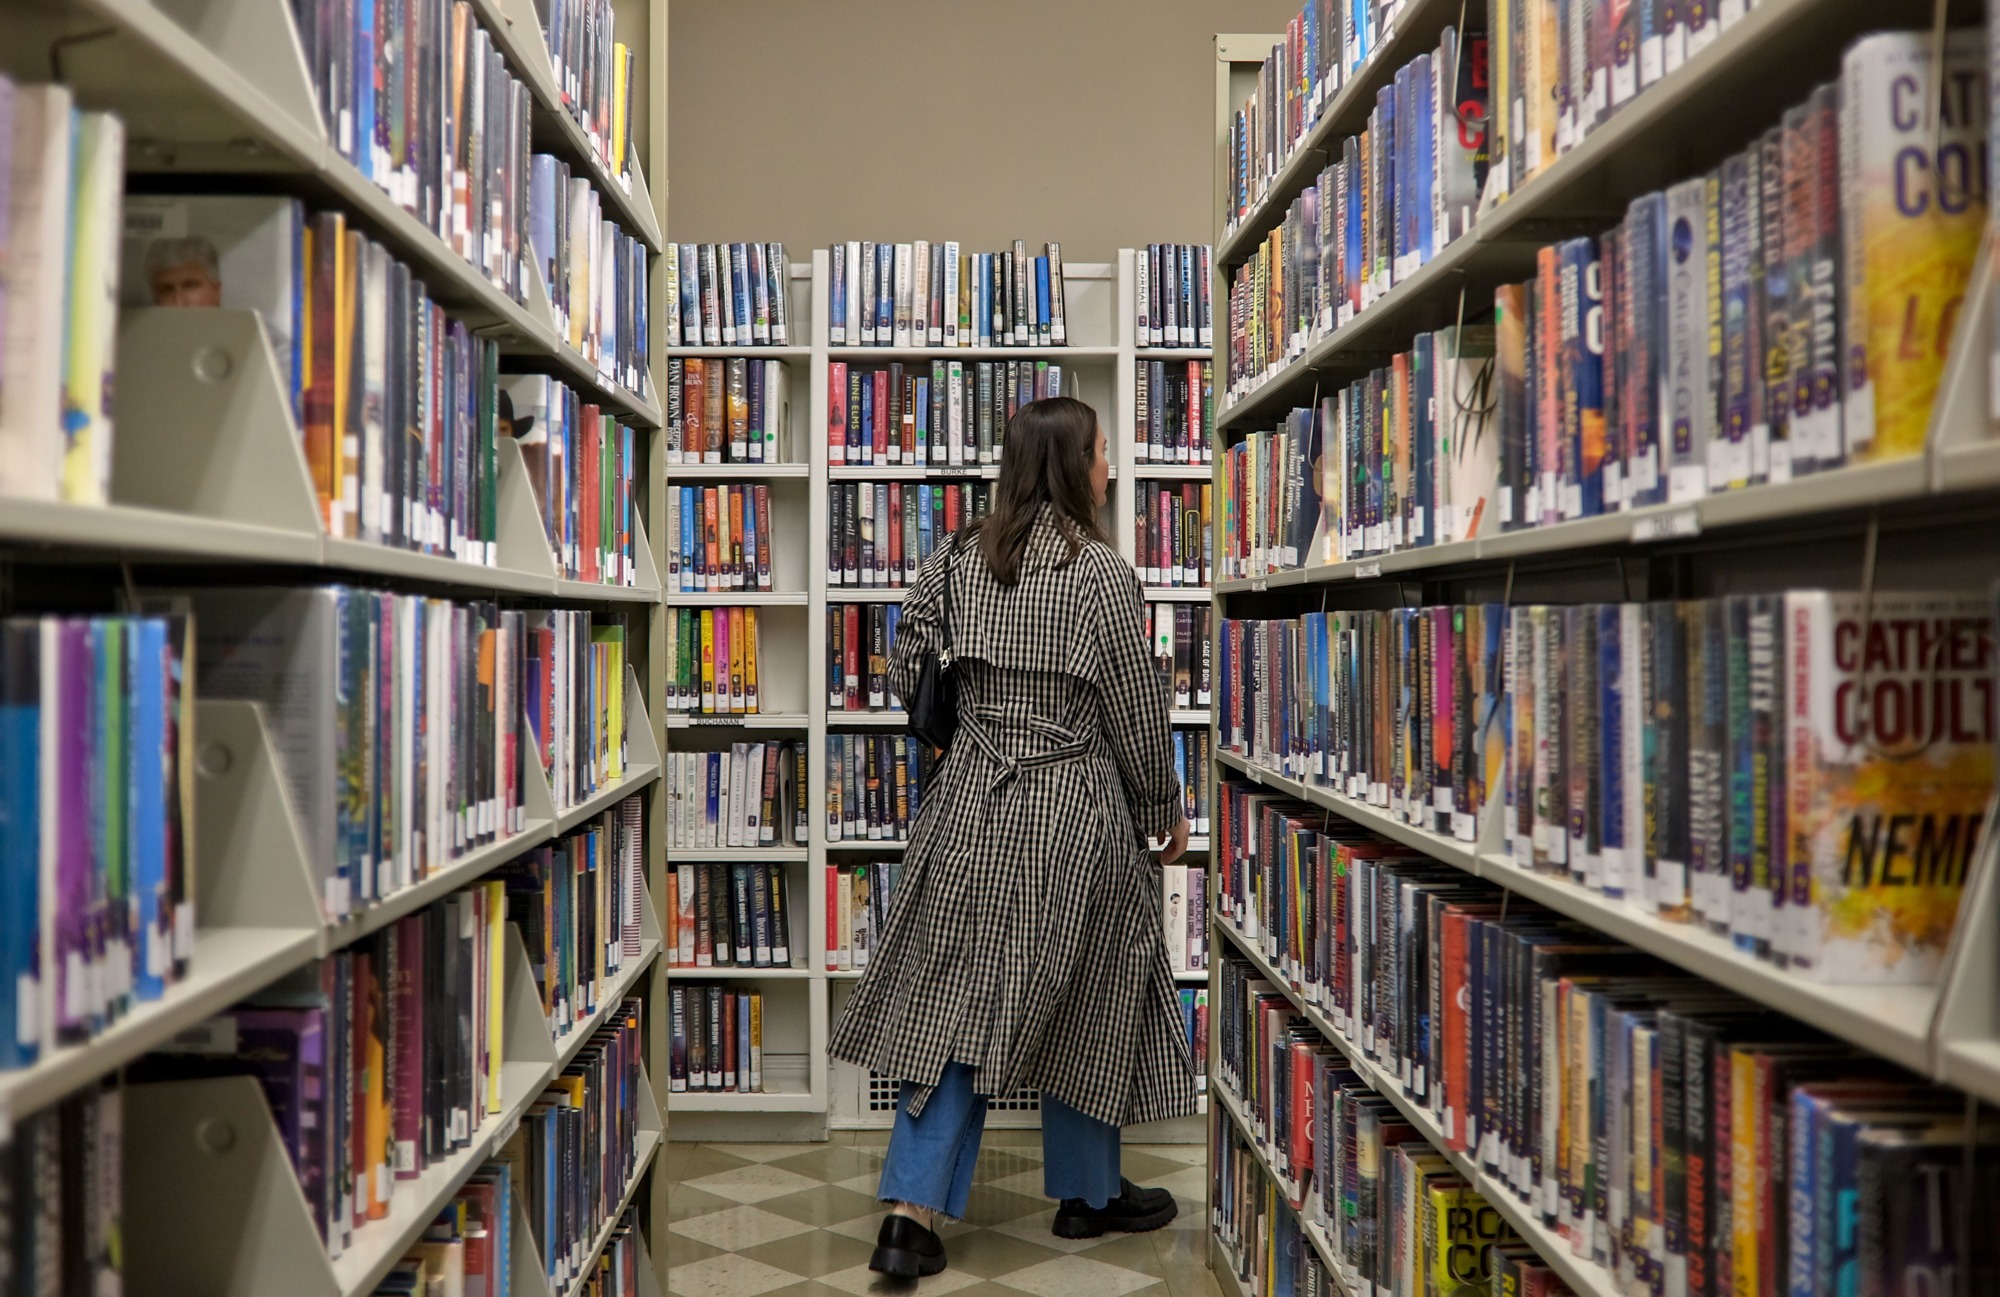 Alyssa walks through a library